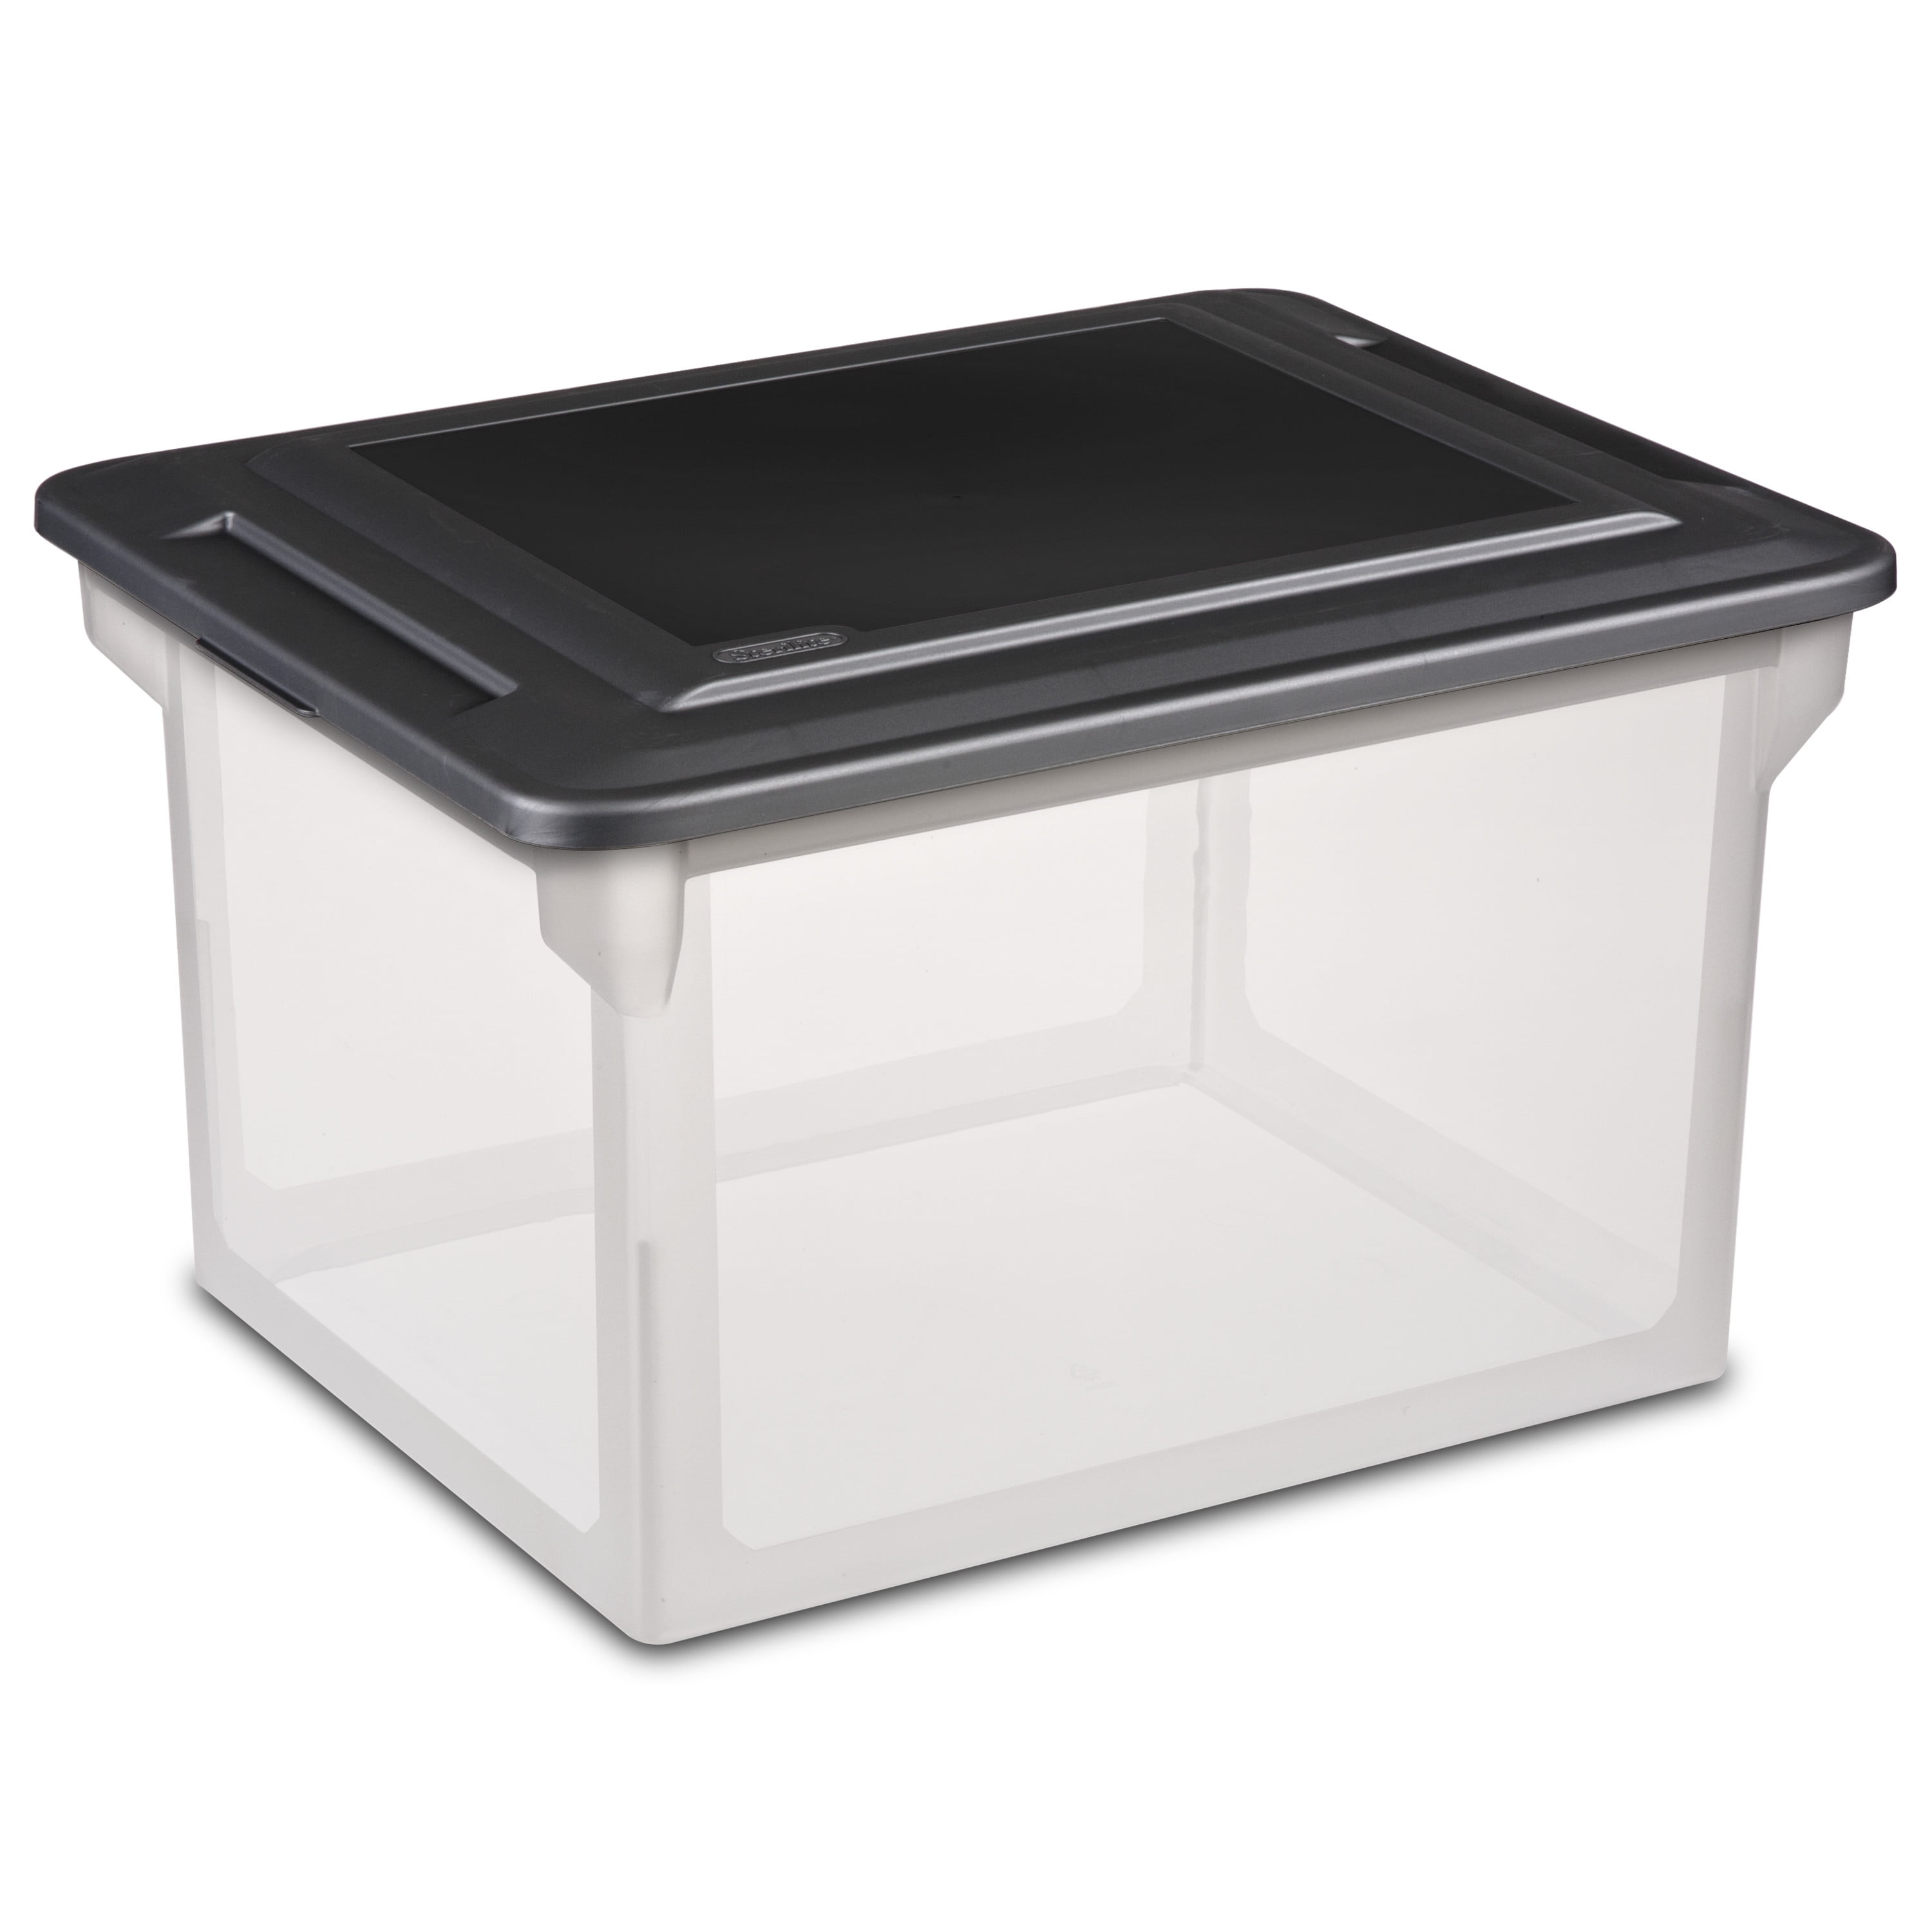 Sterilite Plastic Storage Bin/ File Box, 18 1/2" L x 14" W x 11" H, Black